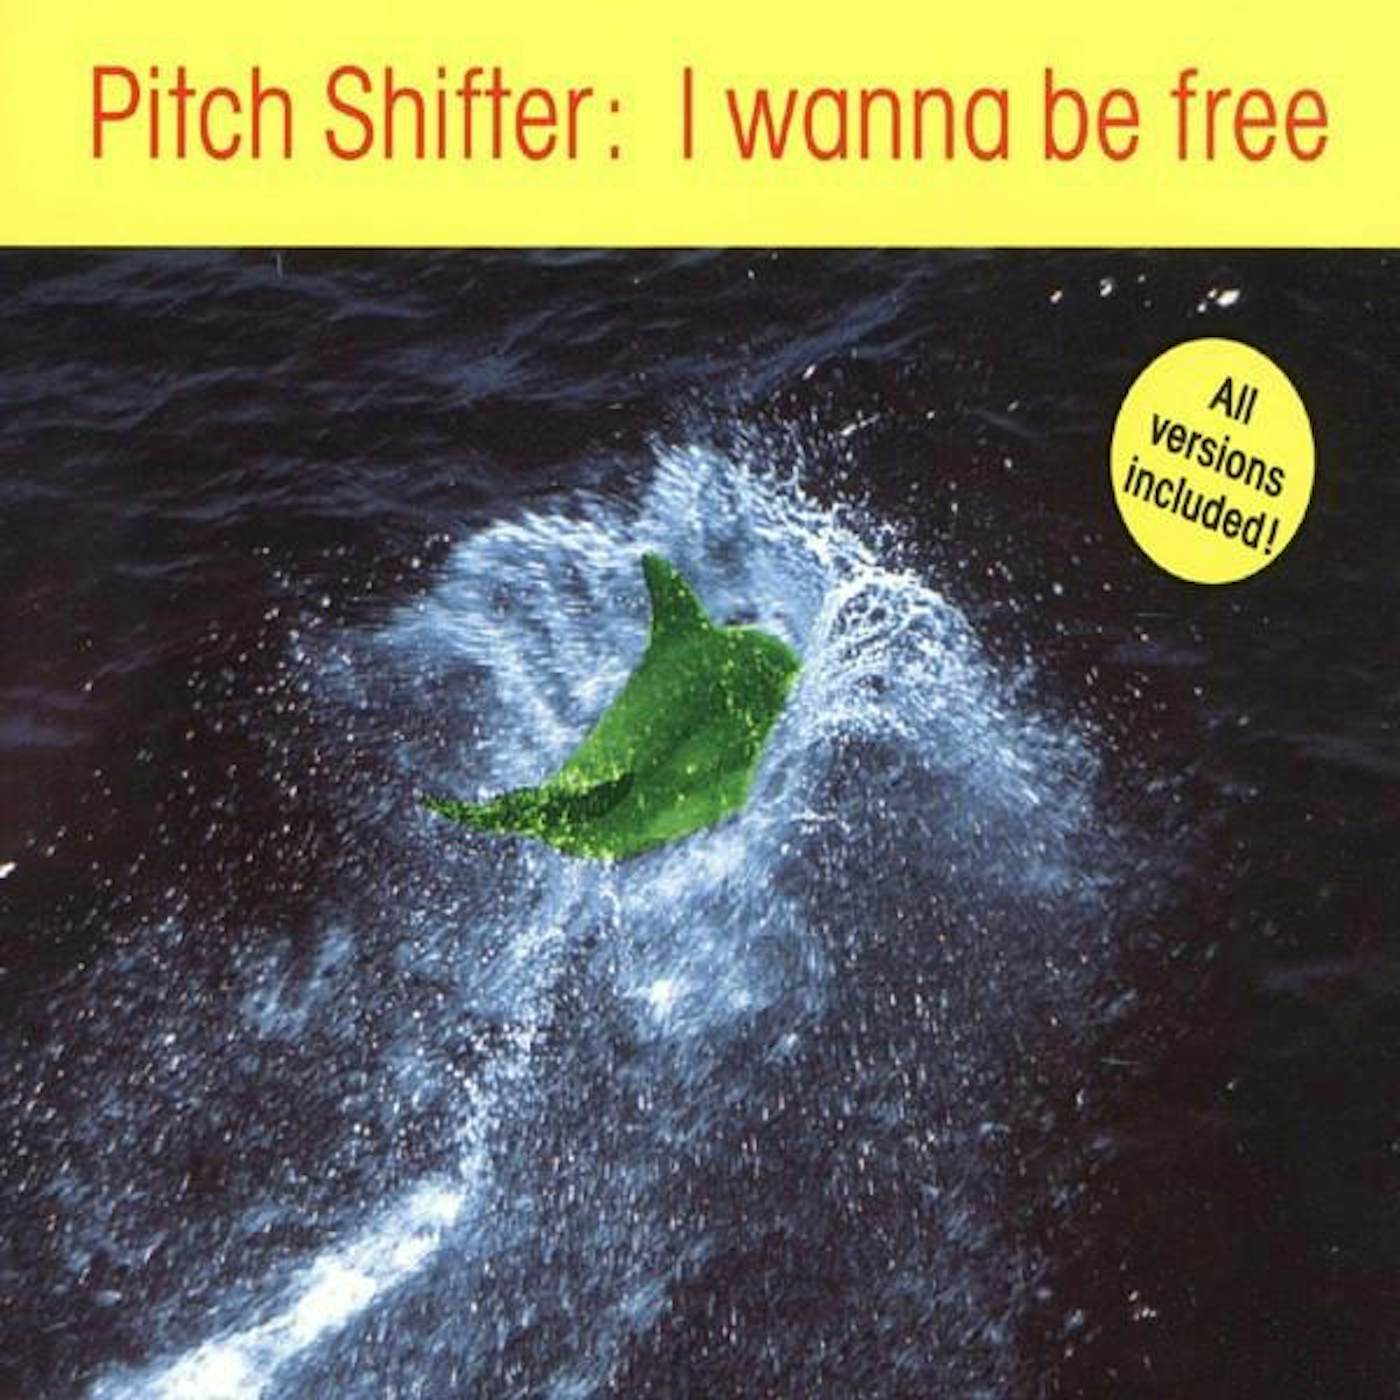 Pitch Shifter